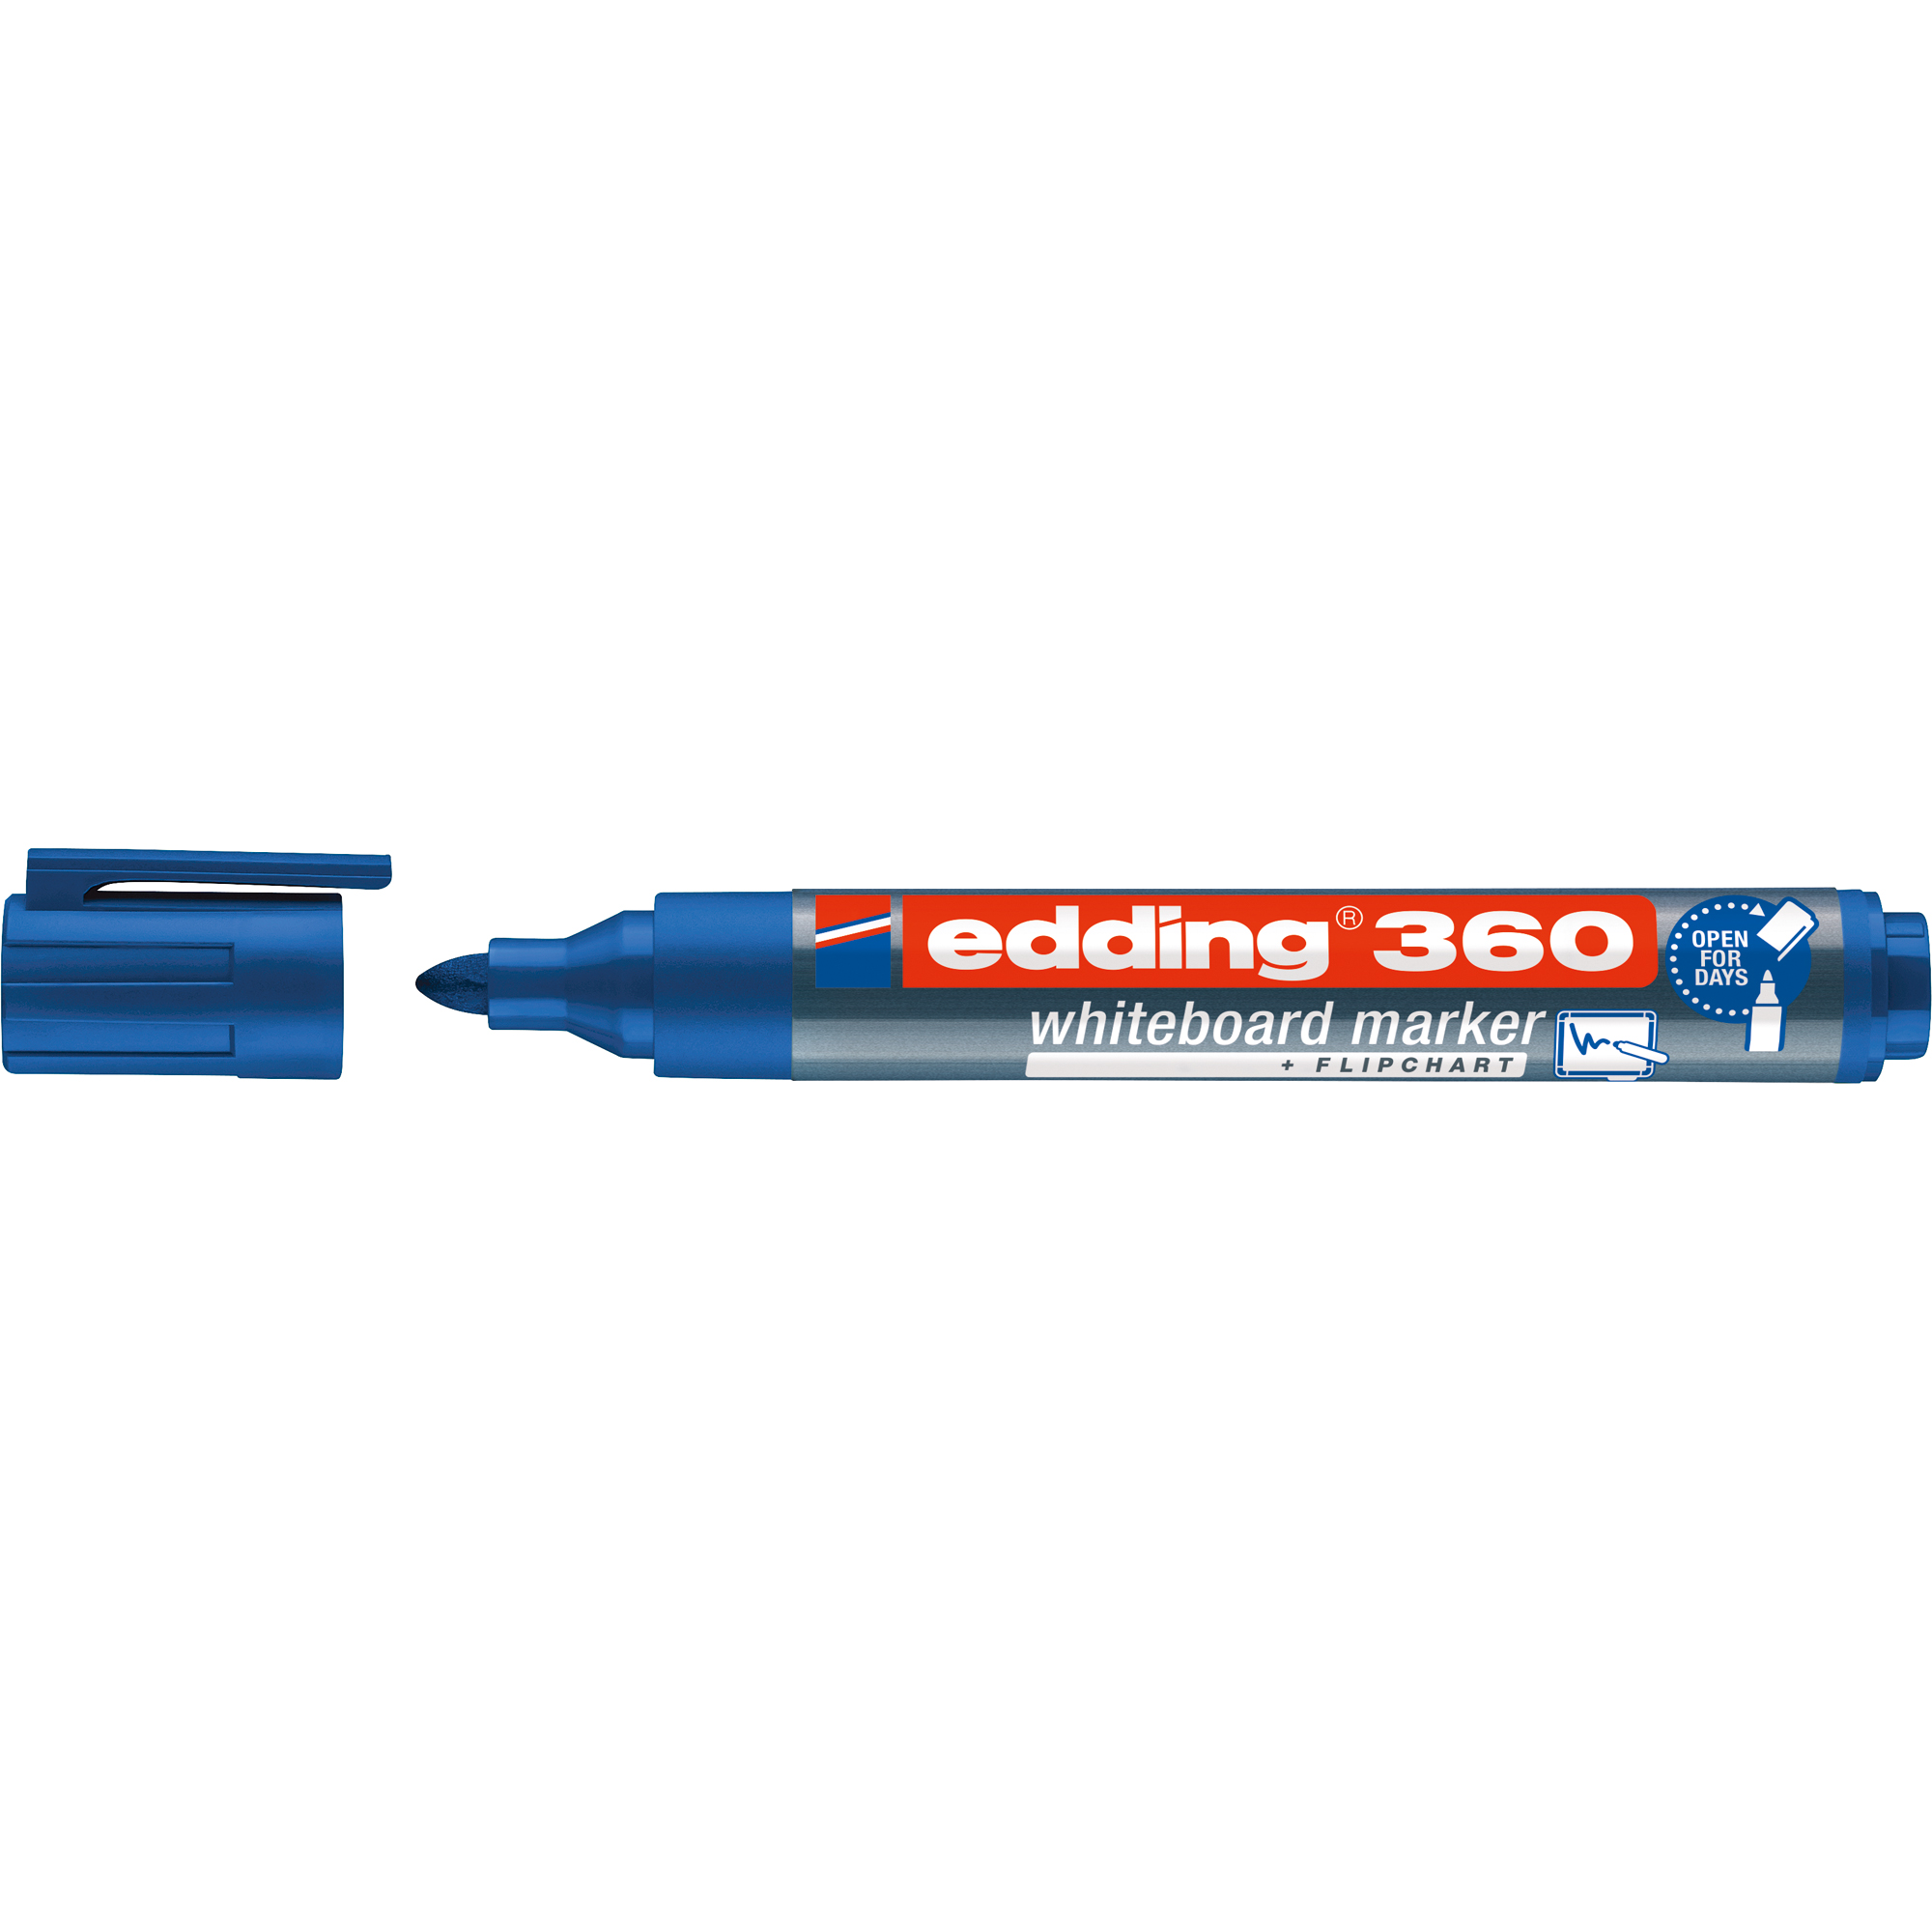 edding Whiteboardmarker 360 blau